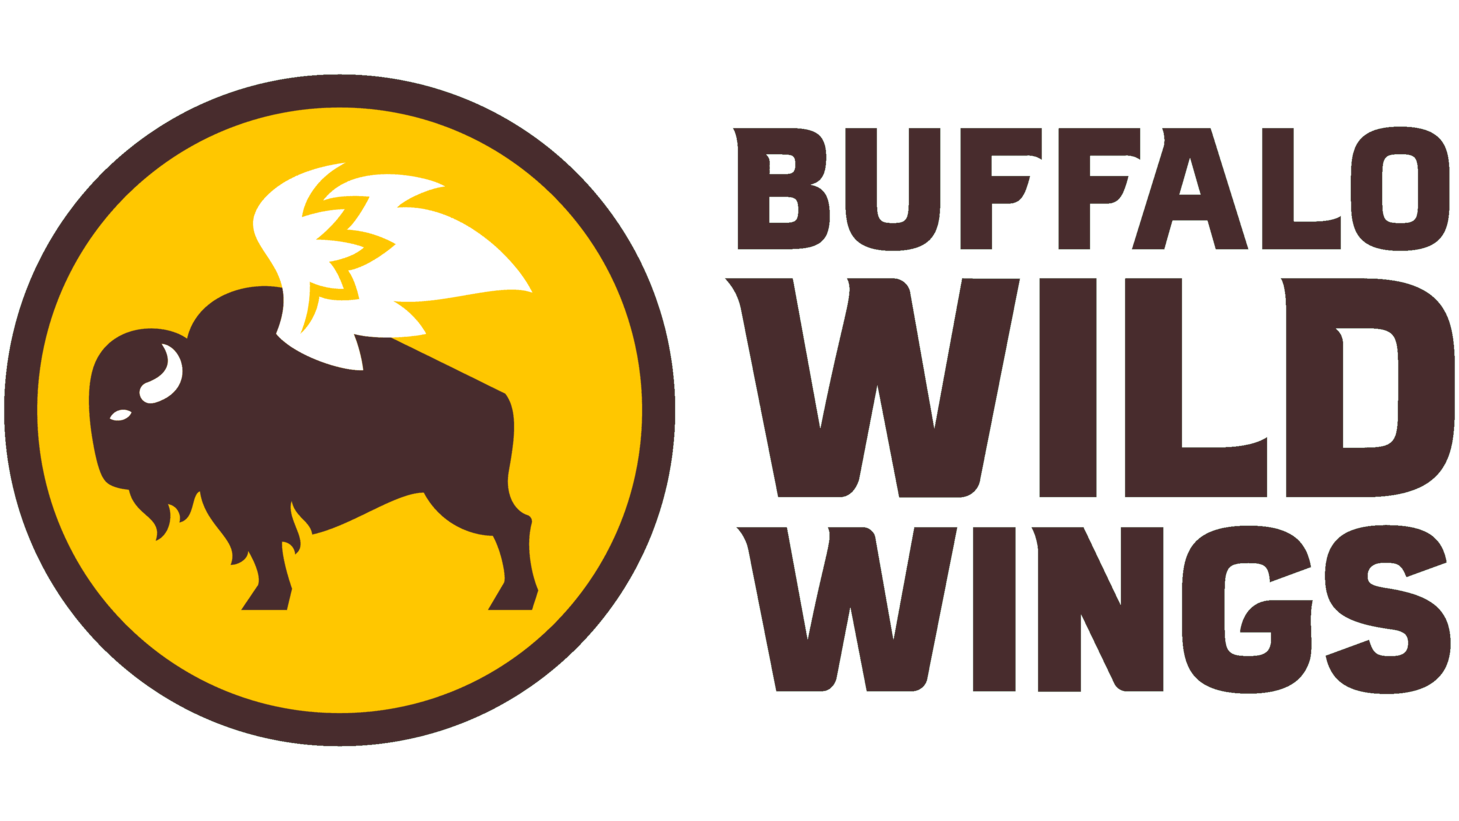 Buffalo wild wings sign